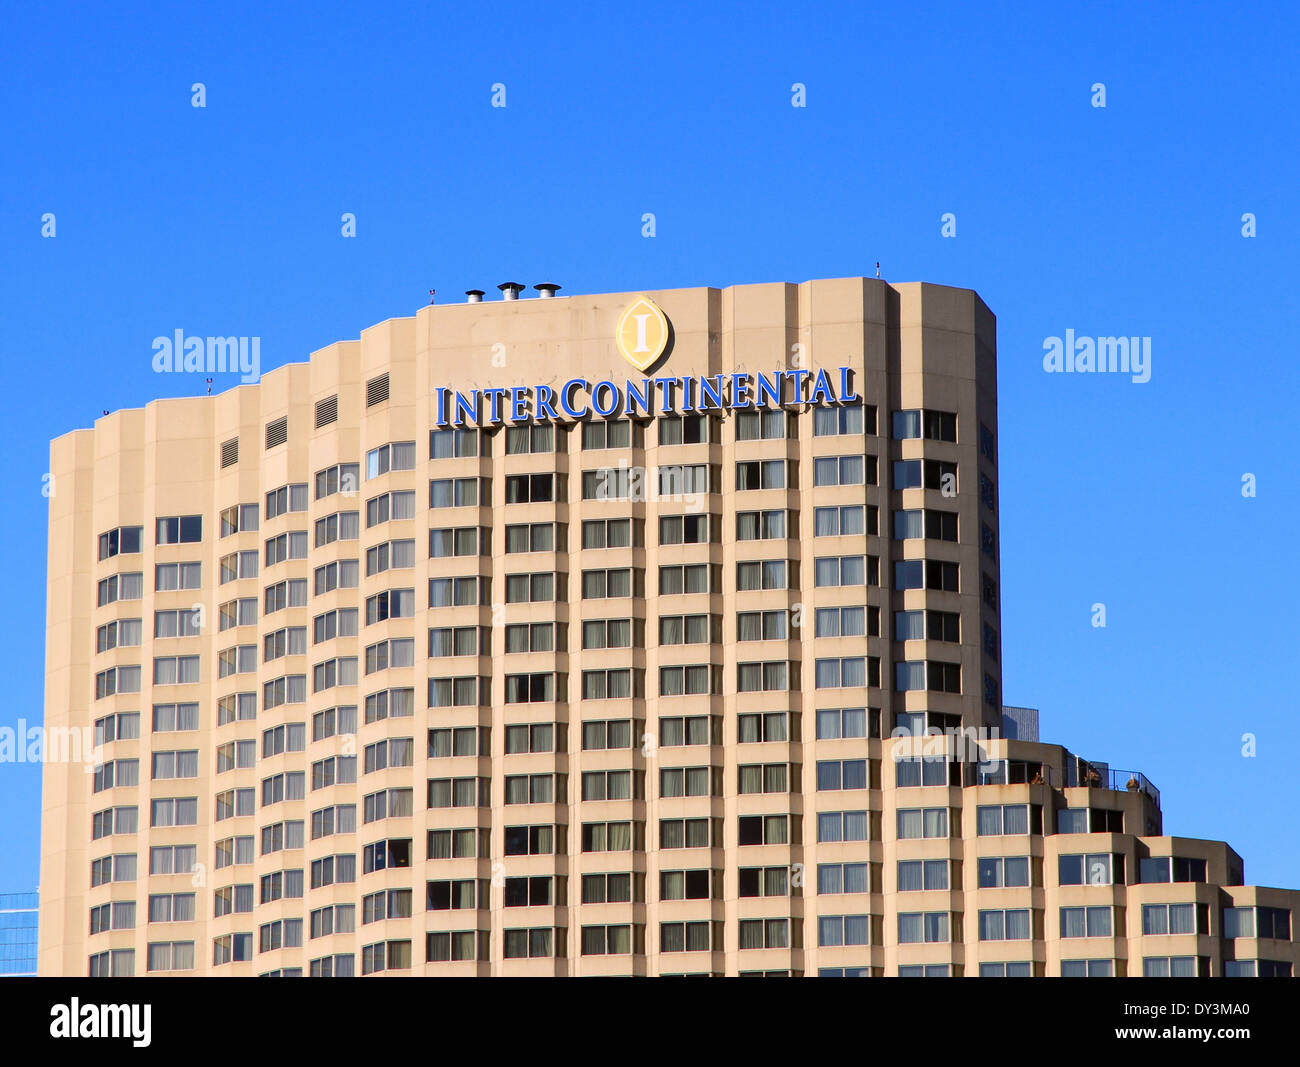 Intercontinental Hotel building in Toronto, Canada Stock Photo